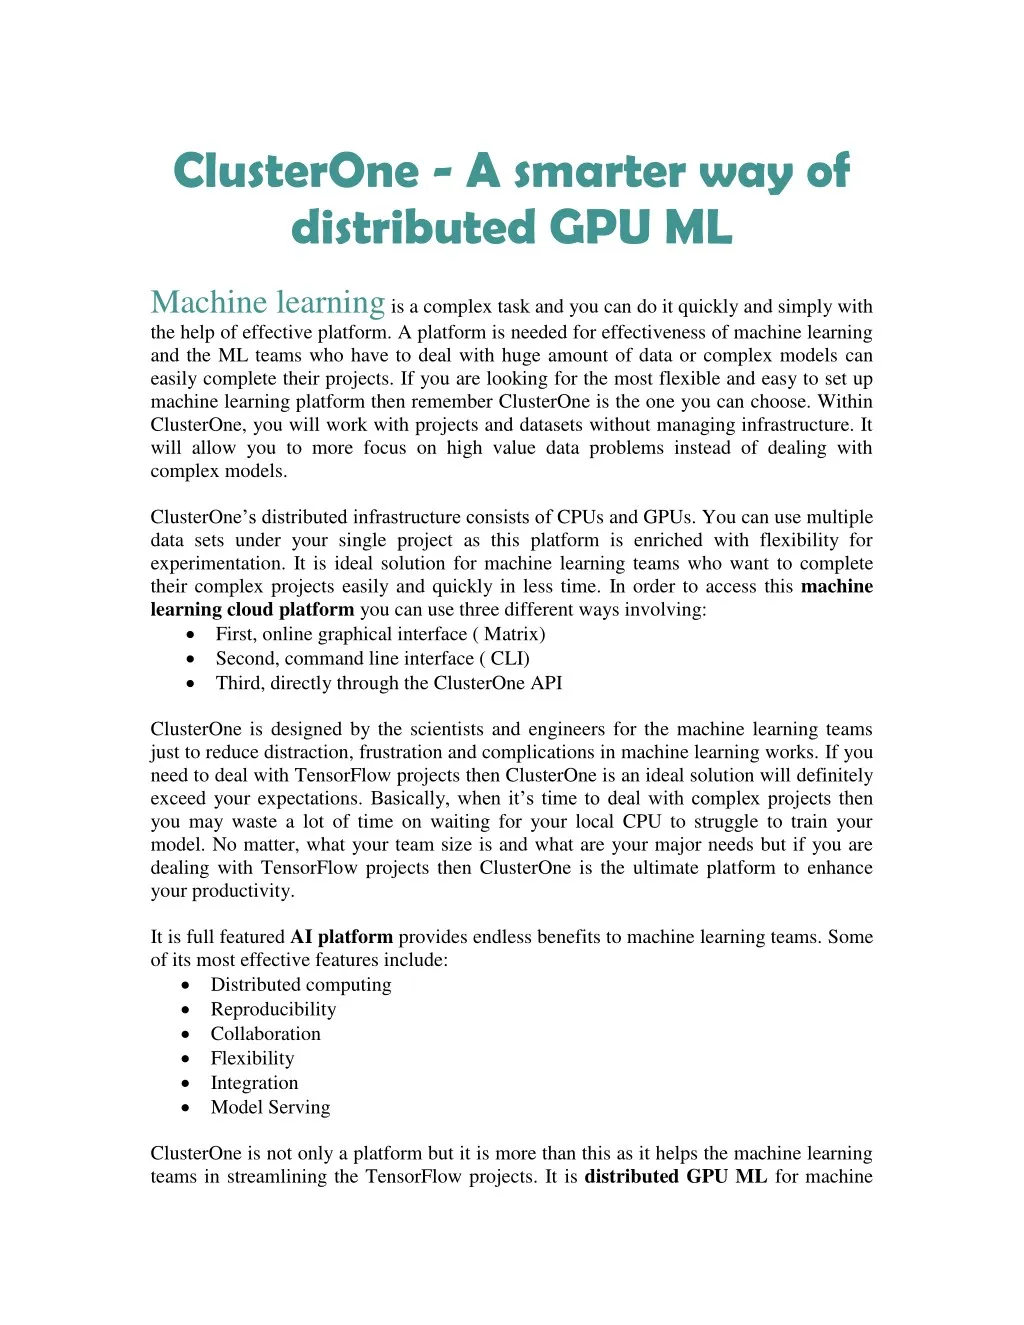 clusterone a smarter way of distributed gpu ml